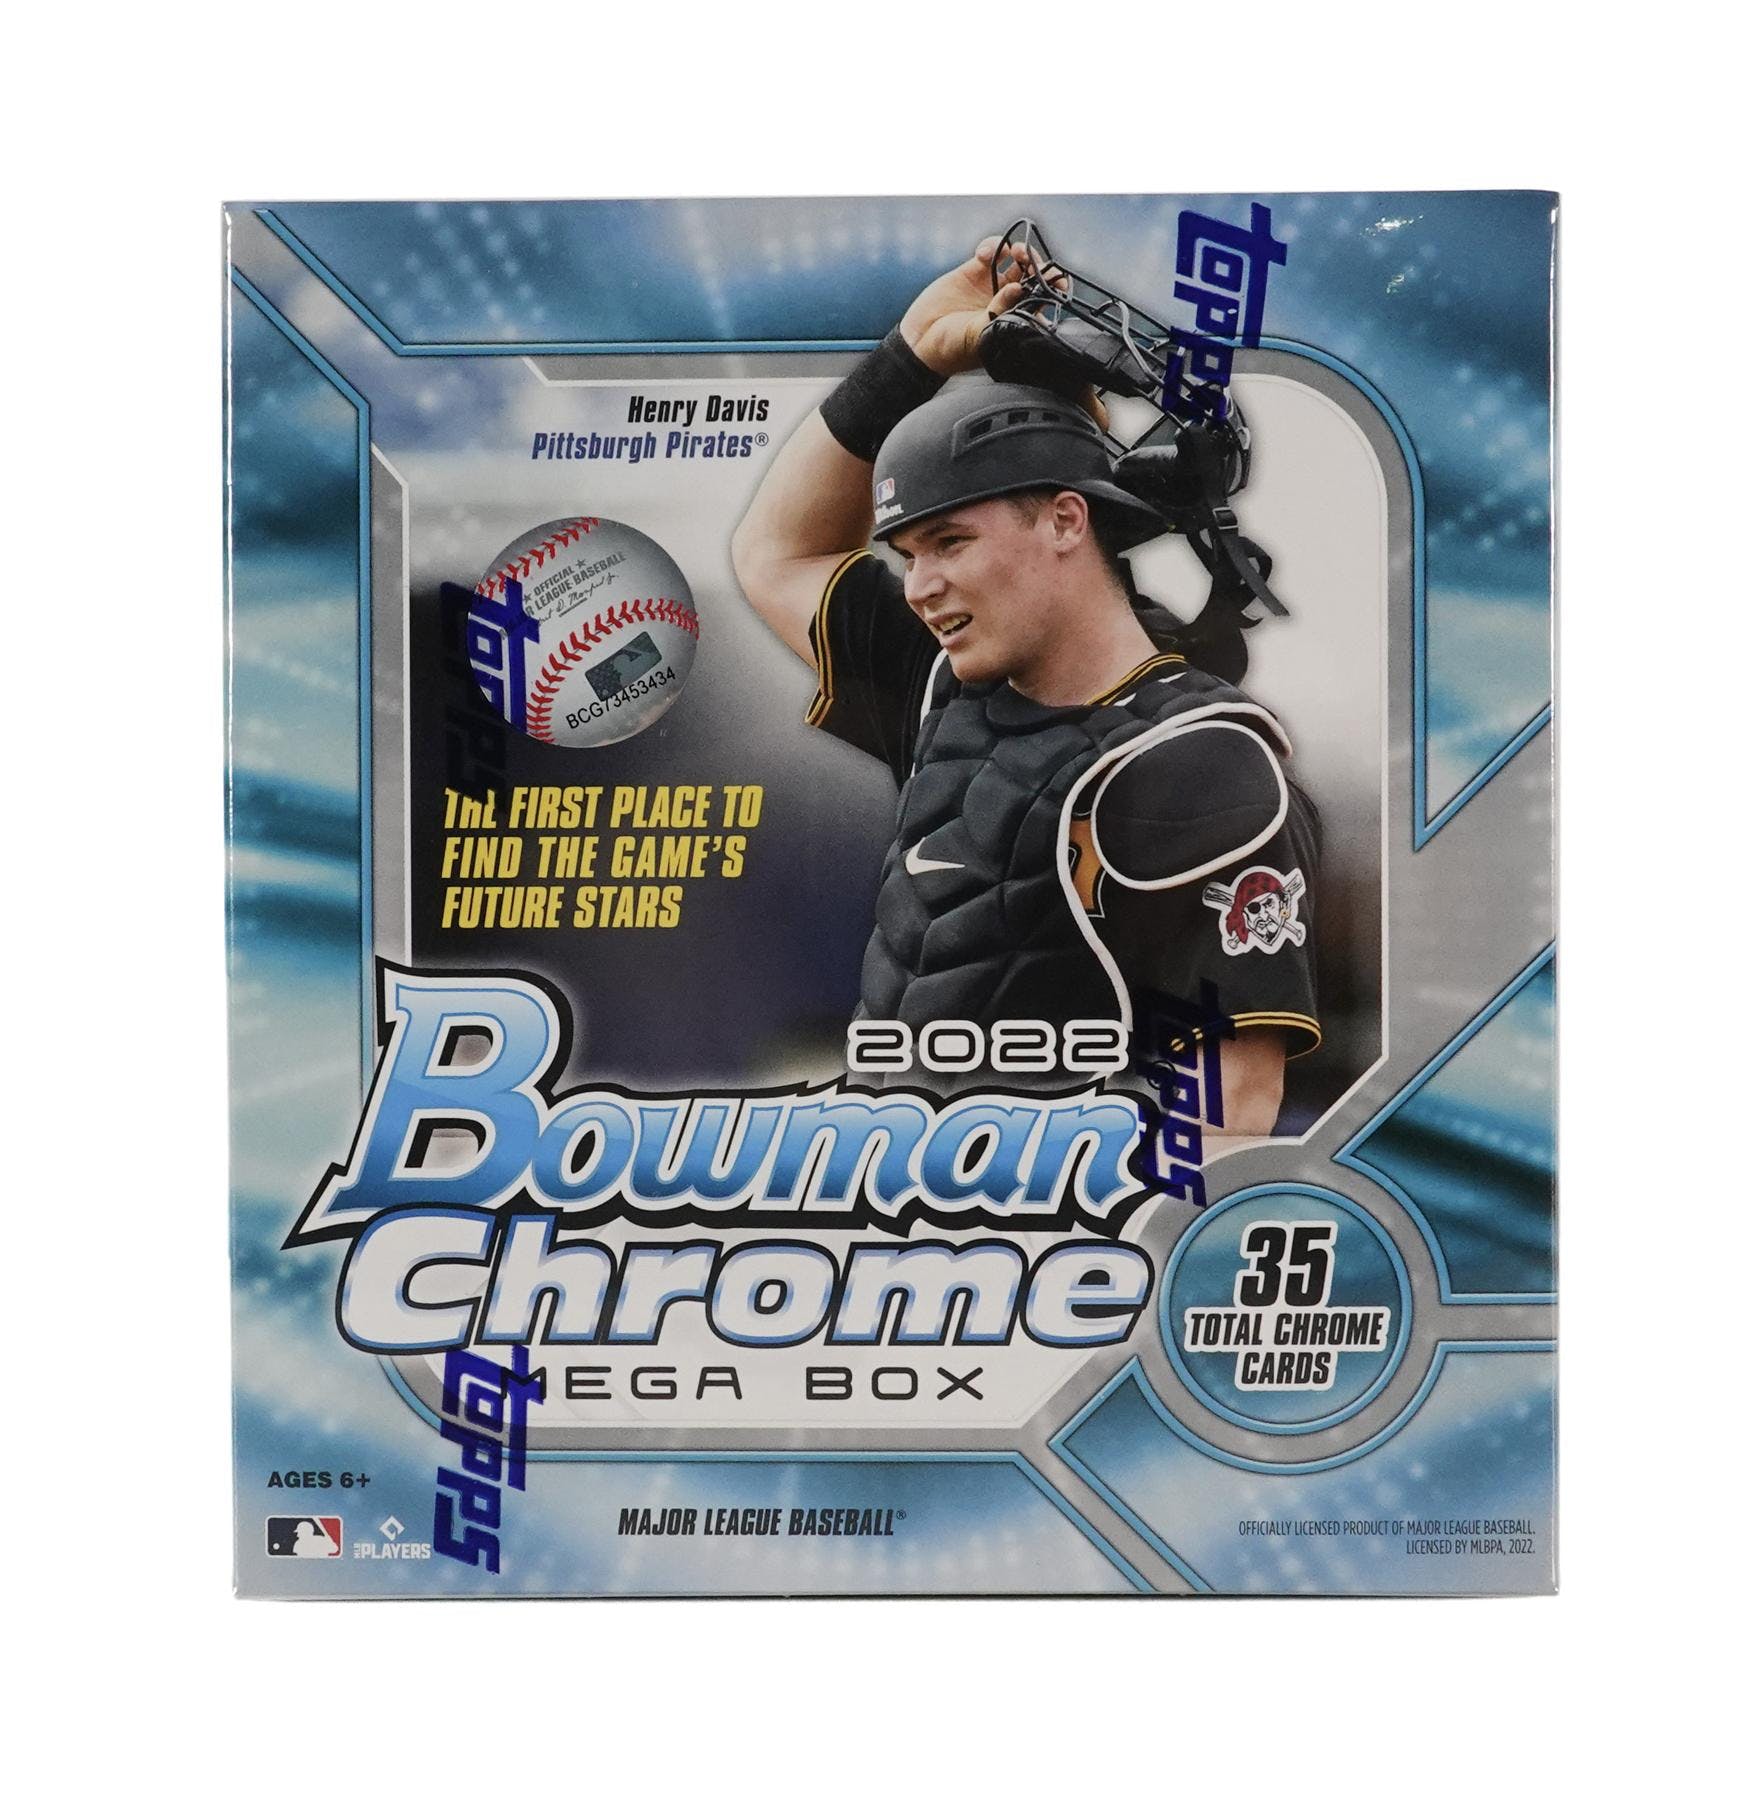 JASSON DOMINGUEZ ROOKIE CARD Bowman Chrome MOJO REFRACTOR RC New York  Yankees!